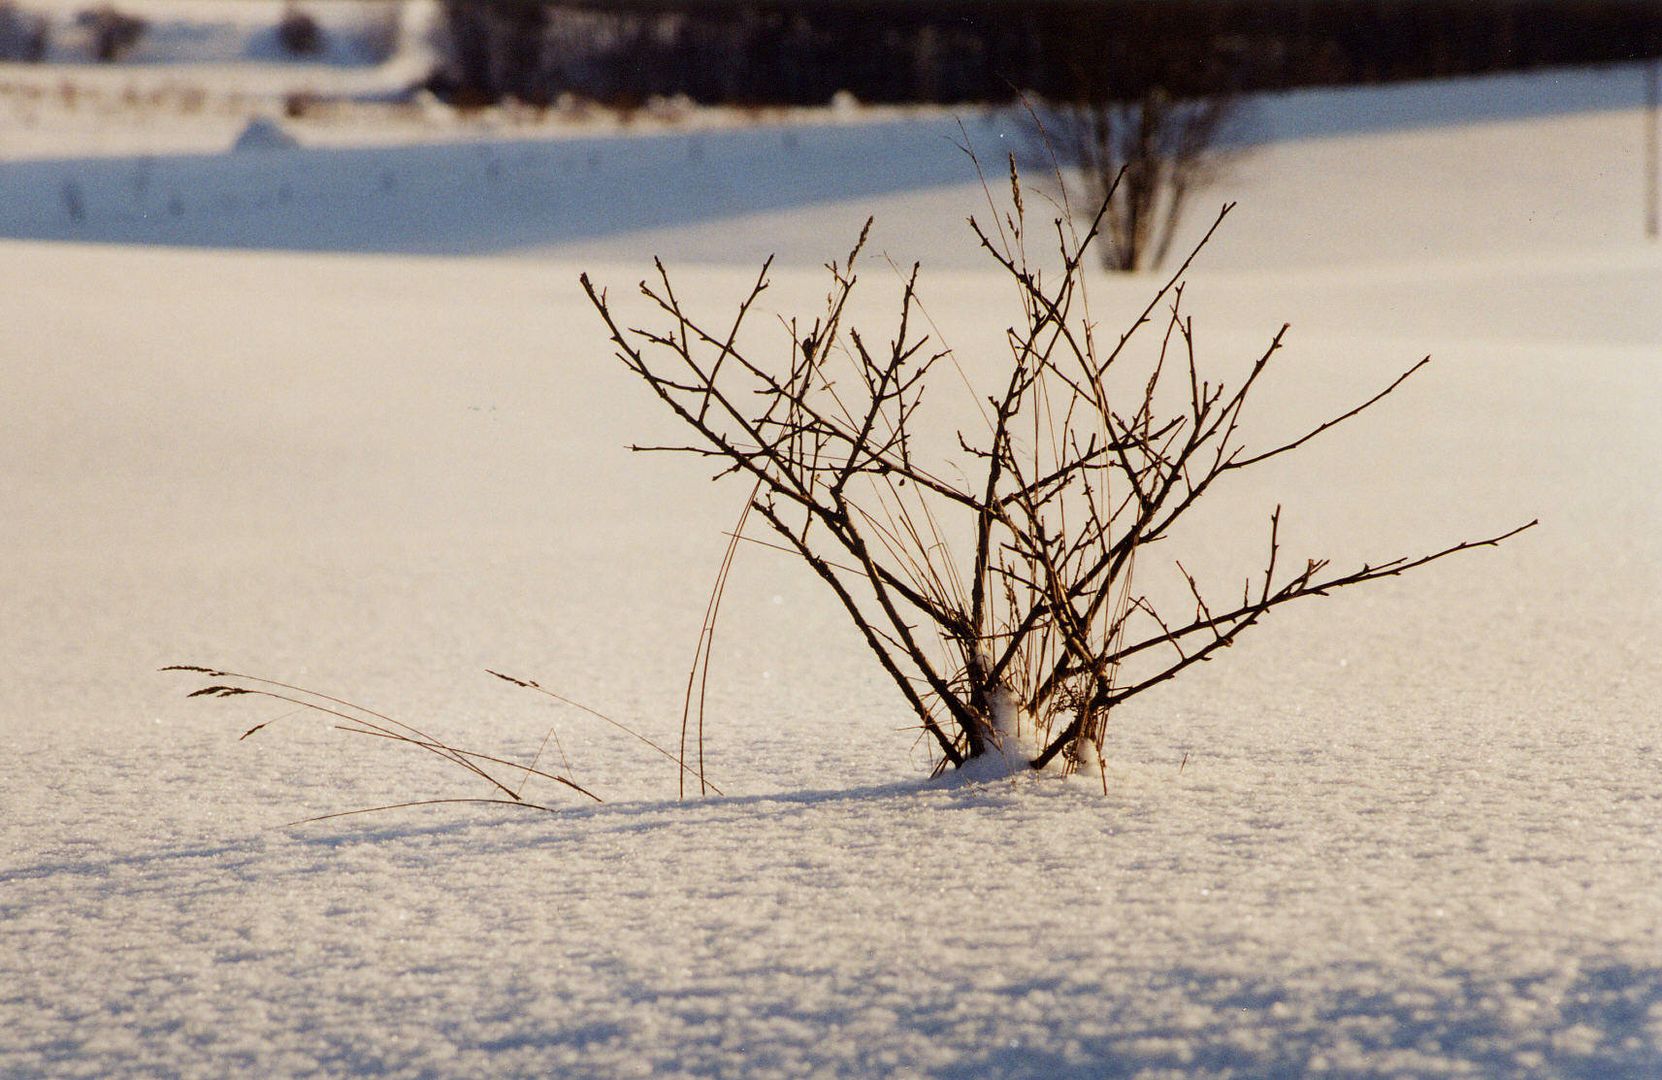 Winter in Ermland